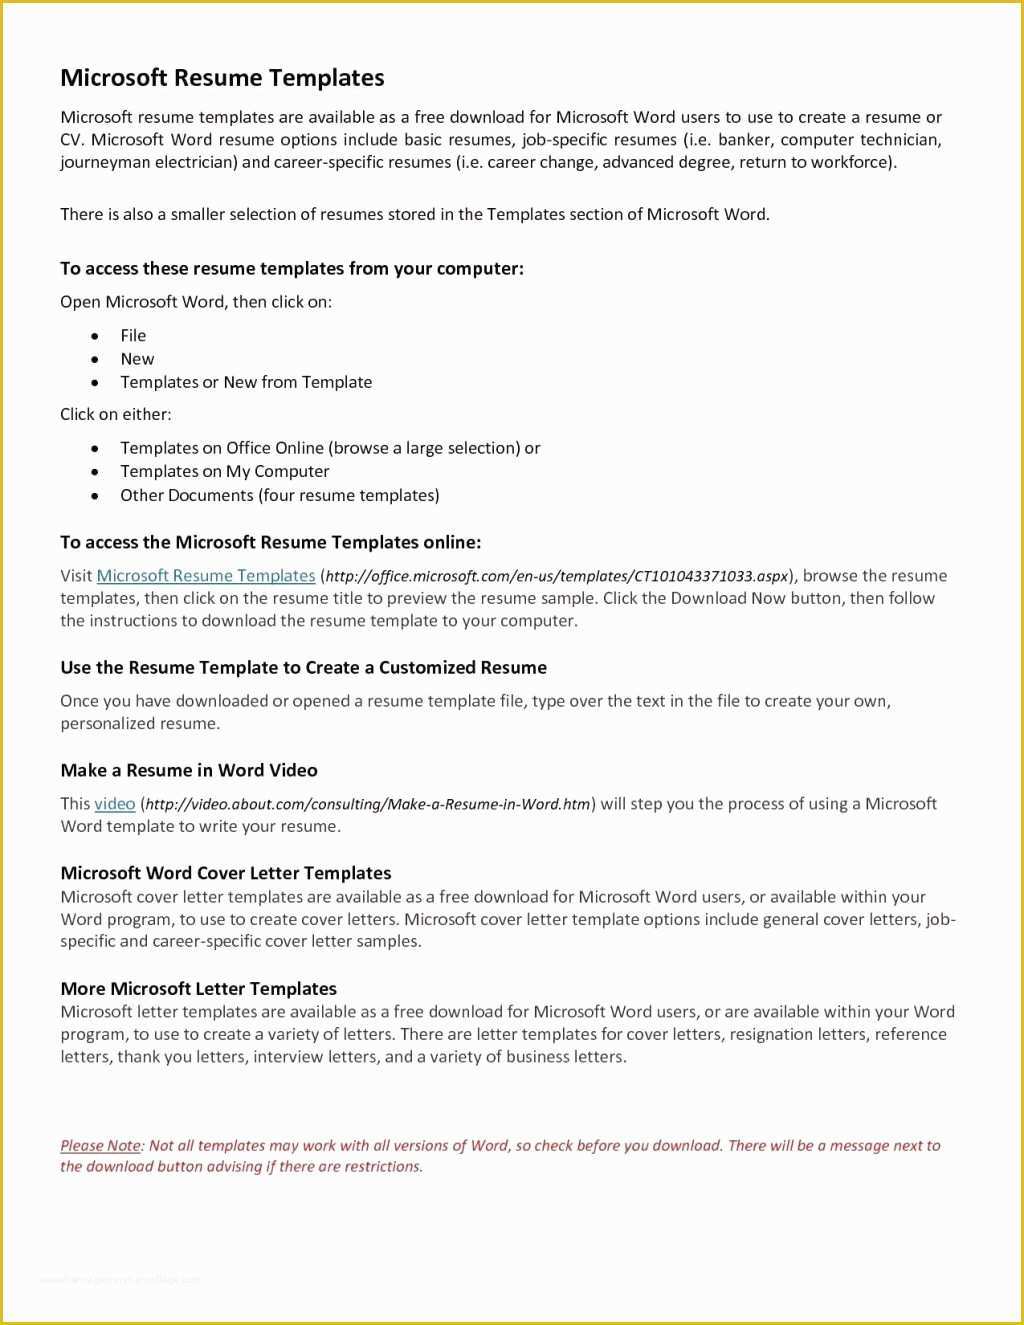 Free Resume Templates Microsoft Word Of Resume Template Best Free Resume Templates 2019 My